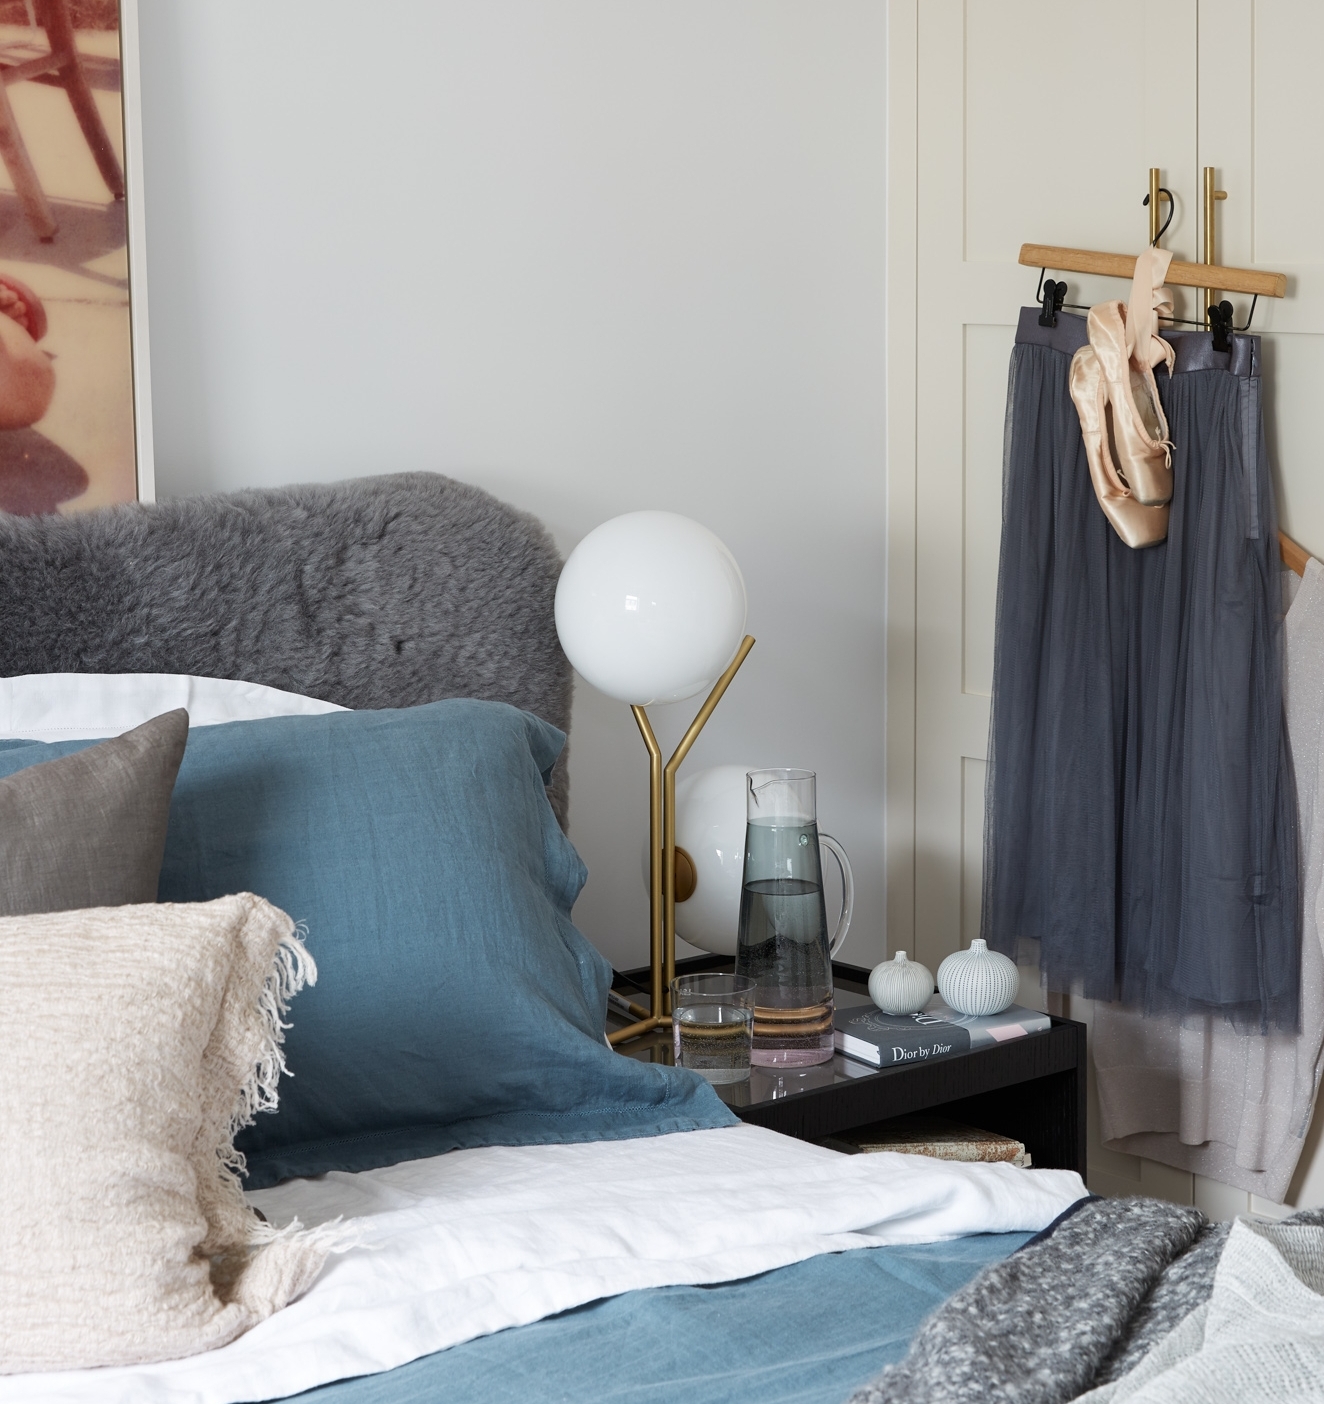 Deze elegante slaapkamer is ingericht als een Parisienne boutique hotel